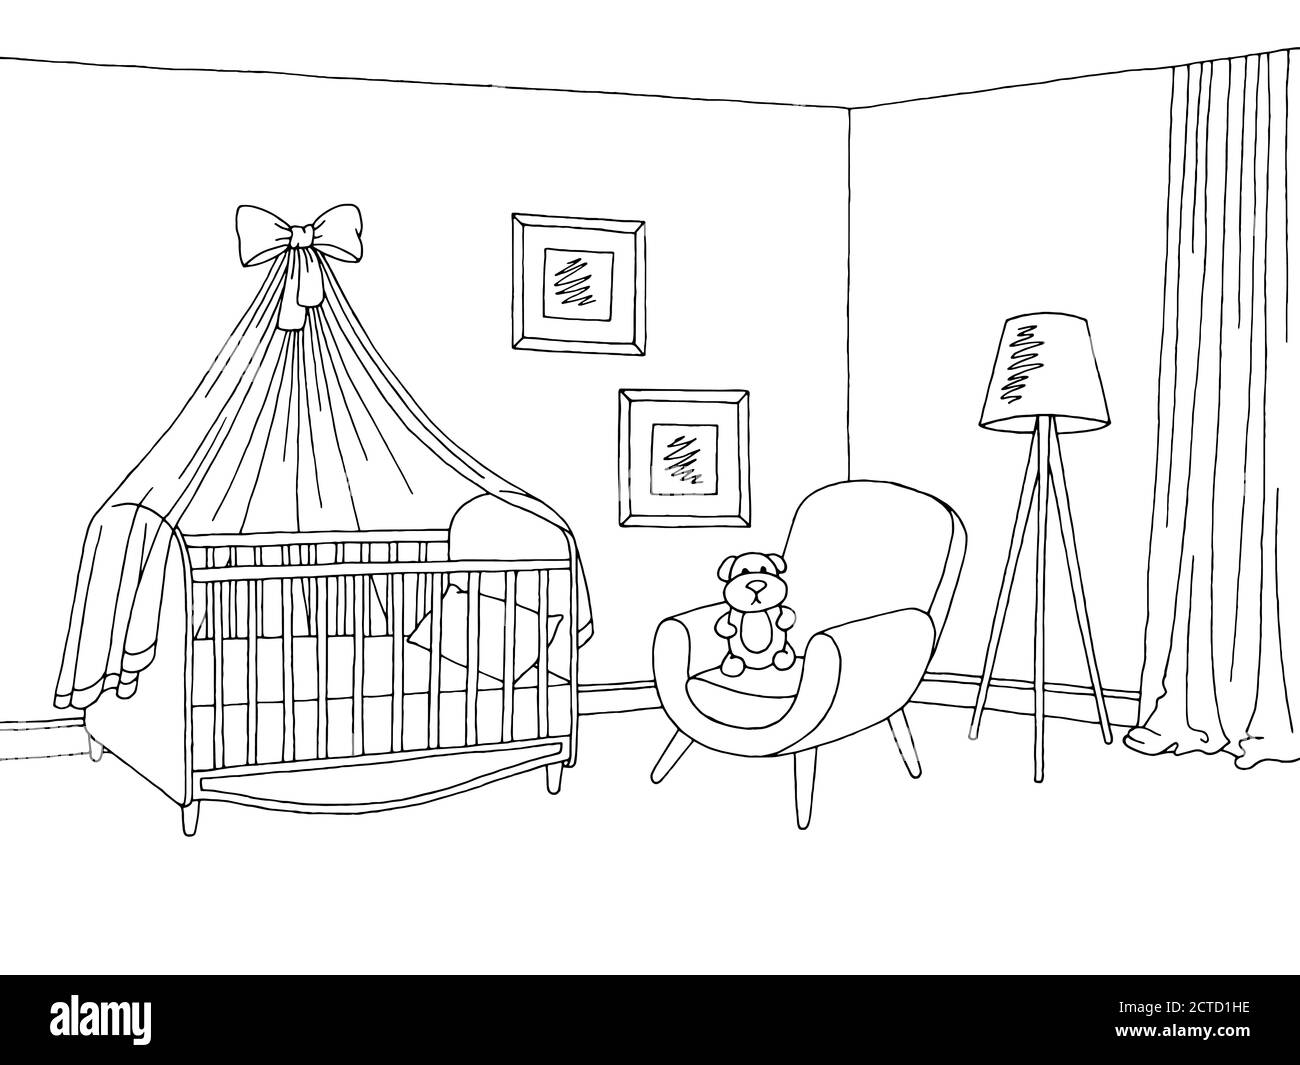 Baby Zimmer Grafik schwarz weiß Innenraum Skizze Illustration Vektor Stock Vektor